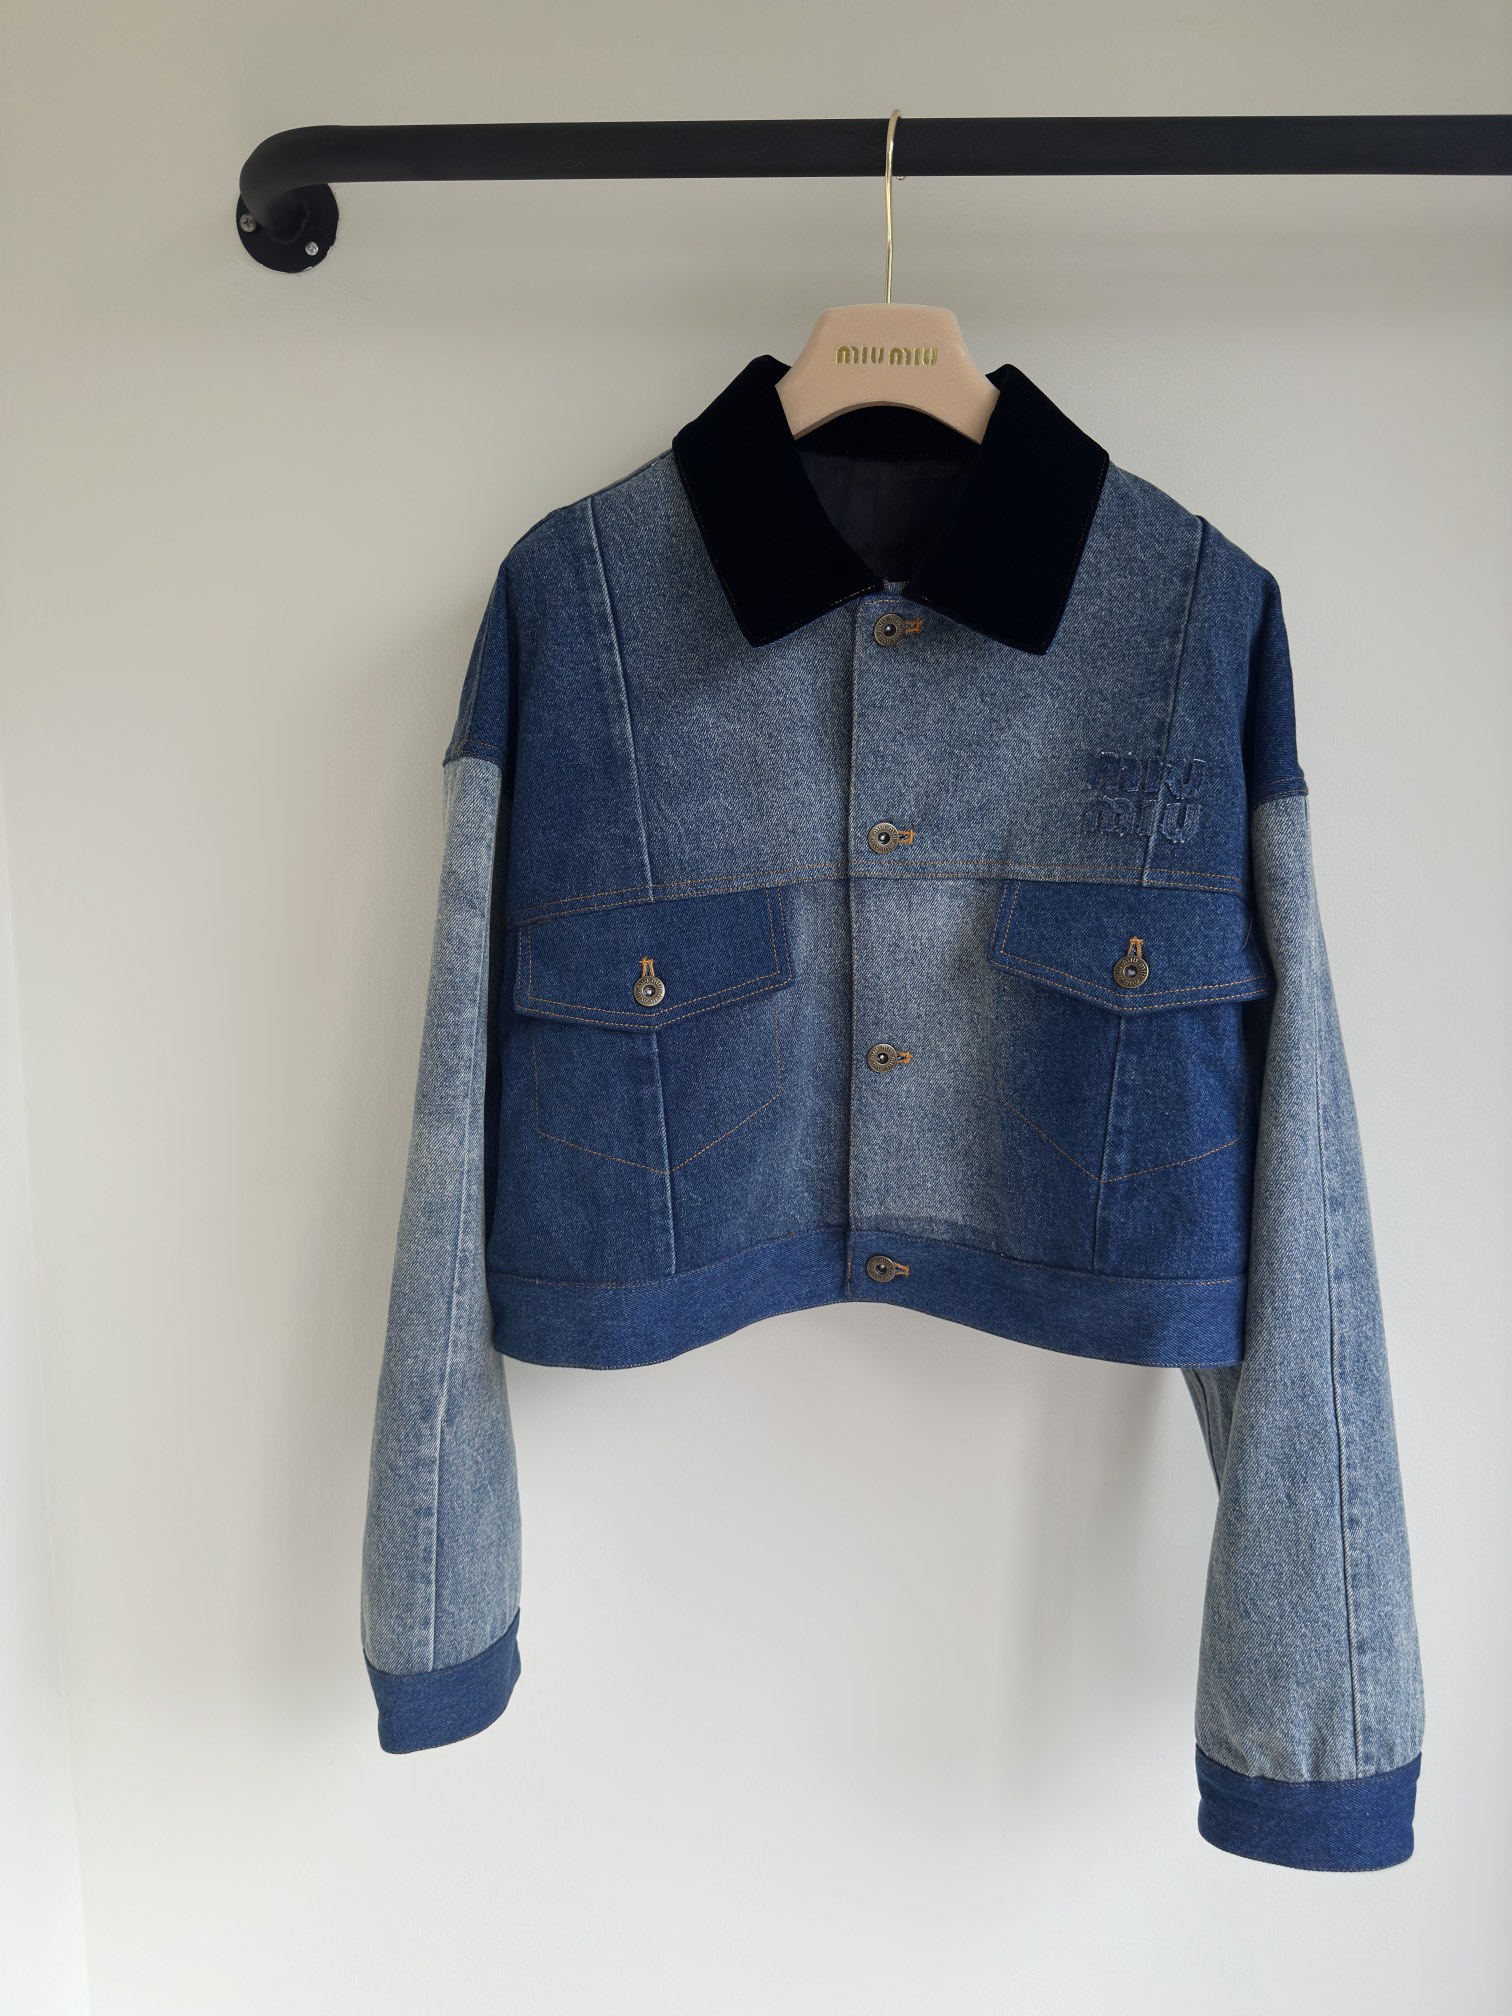 MiuMiu Clothing Coats & Jackets Splicing Spring/Summer Collection